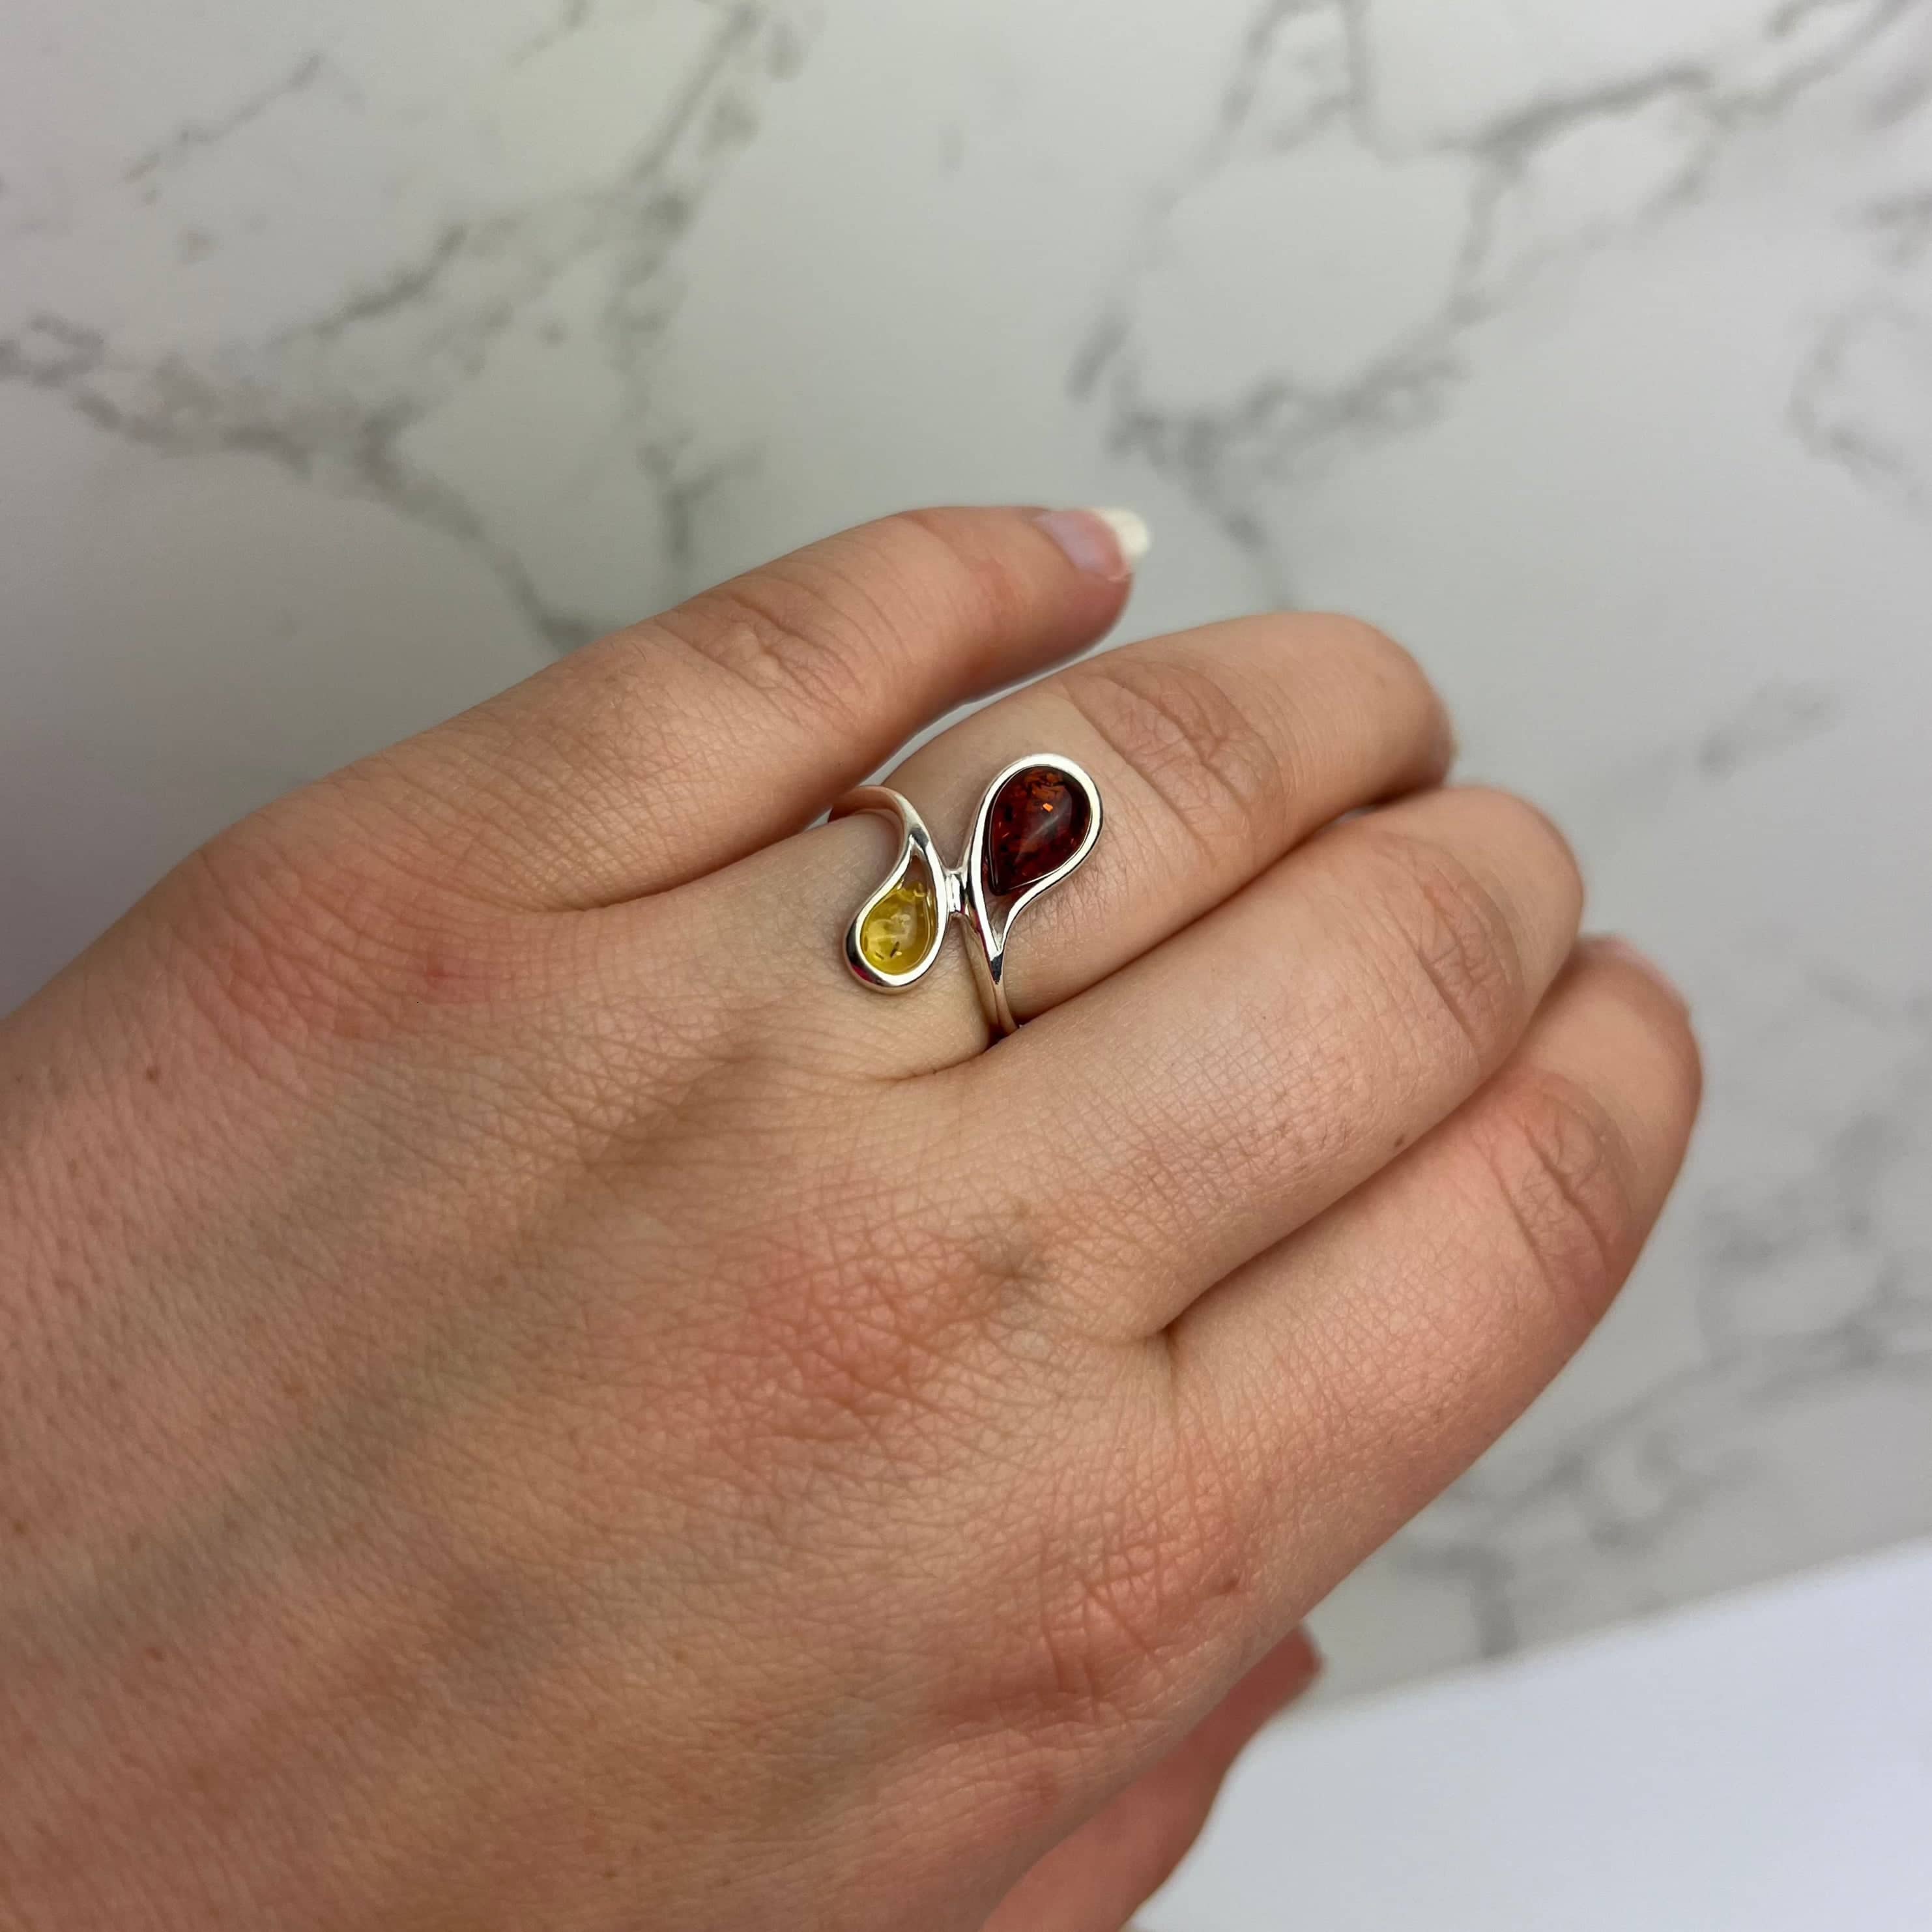 925 Sterling Silver & Baltic Amber Modern Designer Ring - GL729A